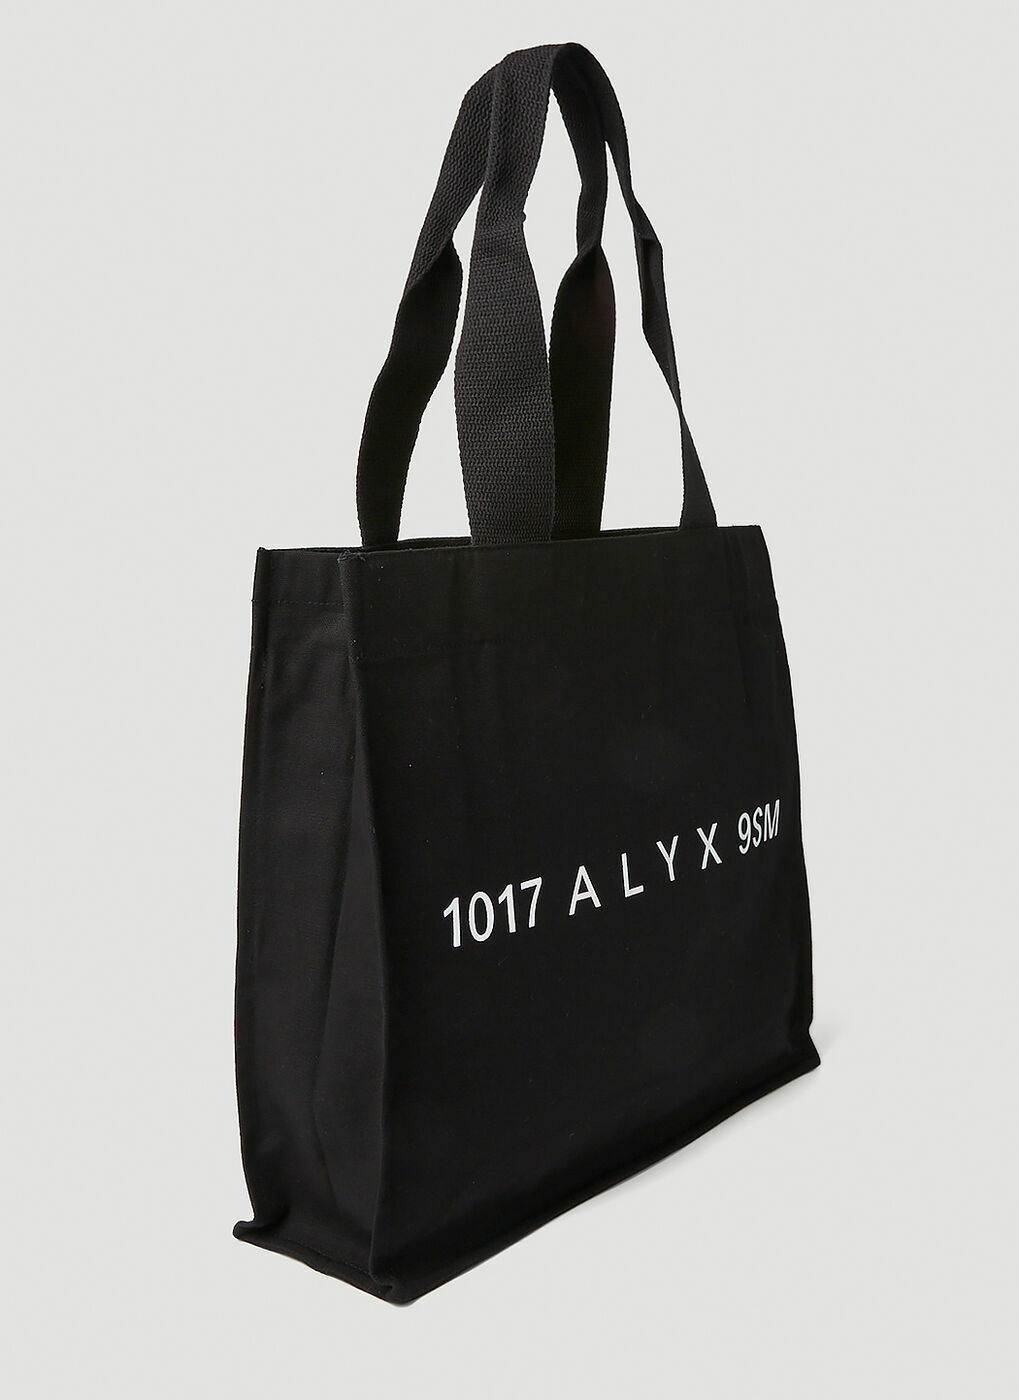 1017 ALYX 9SM - Peace Sign Tote Bag in Black 1017 ALYX 9SM